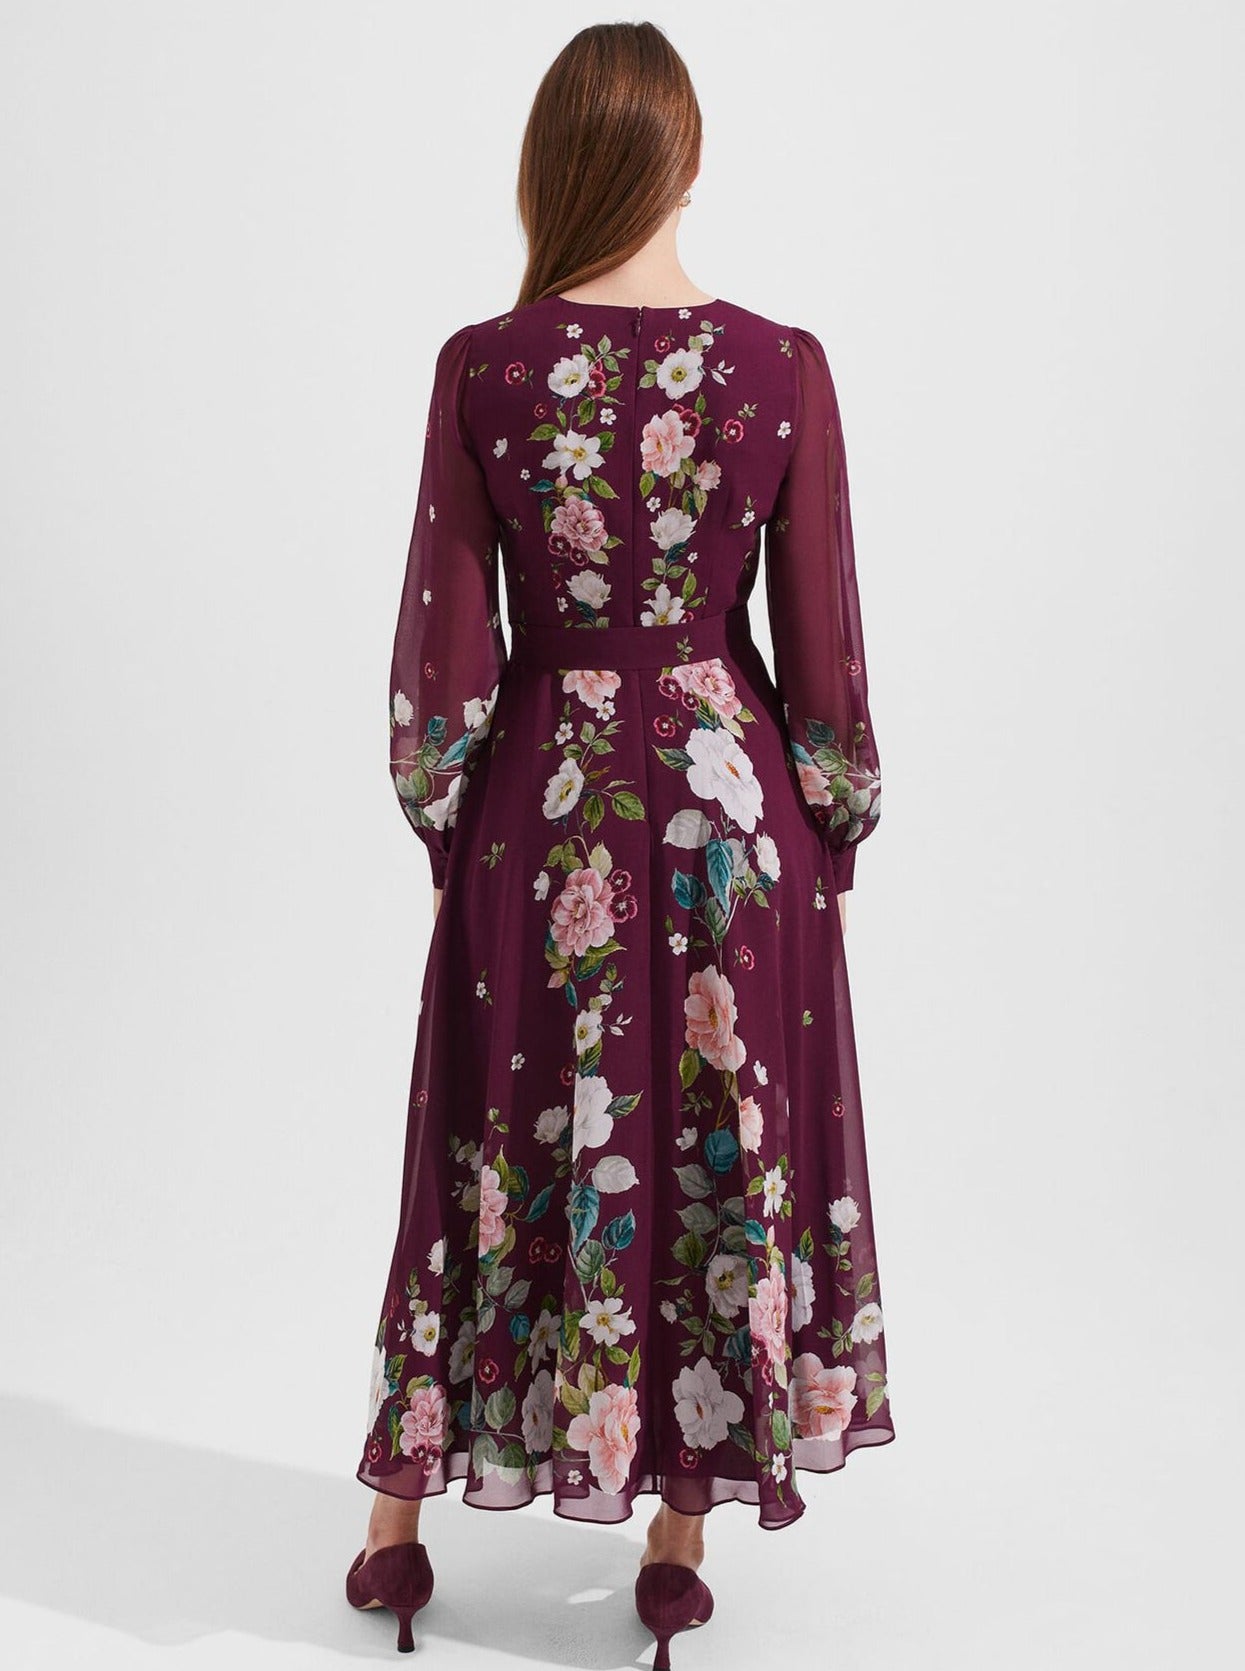 The Floral Silk Dress